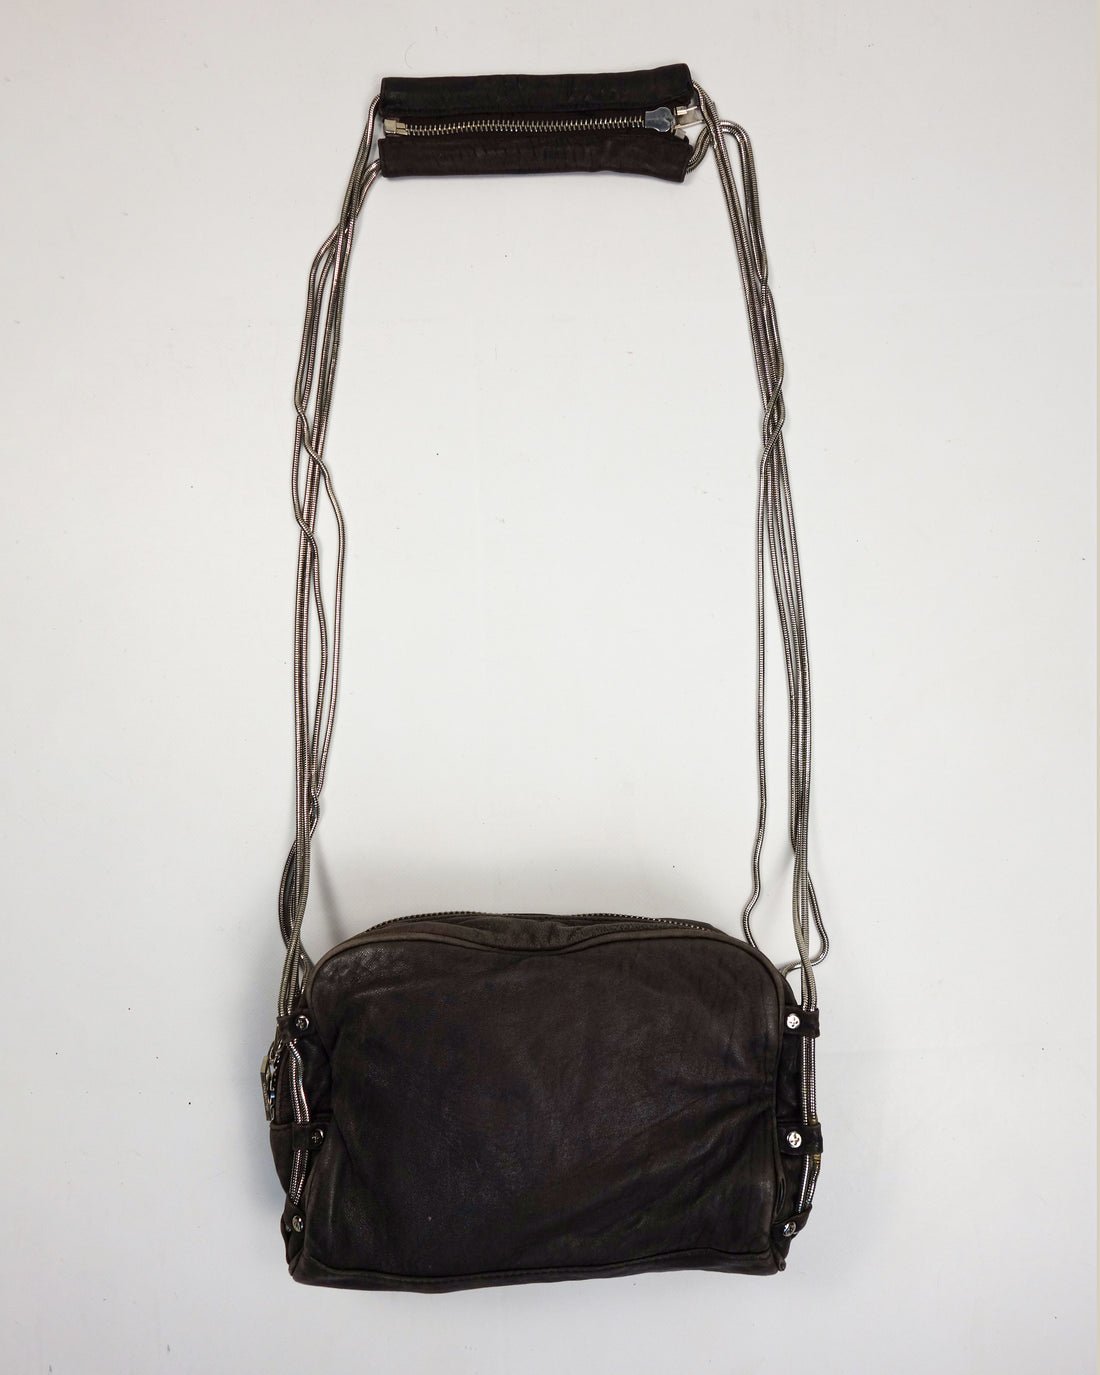 Alexander Wang Brenda Brown Leather Bag 2000's